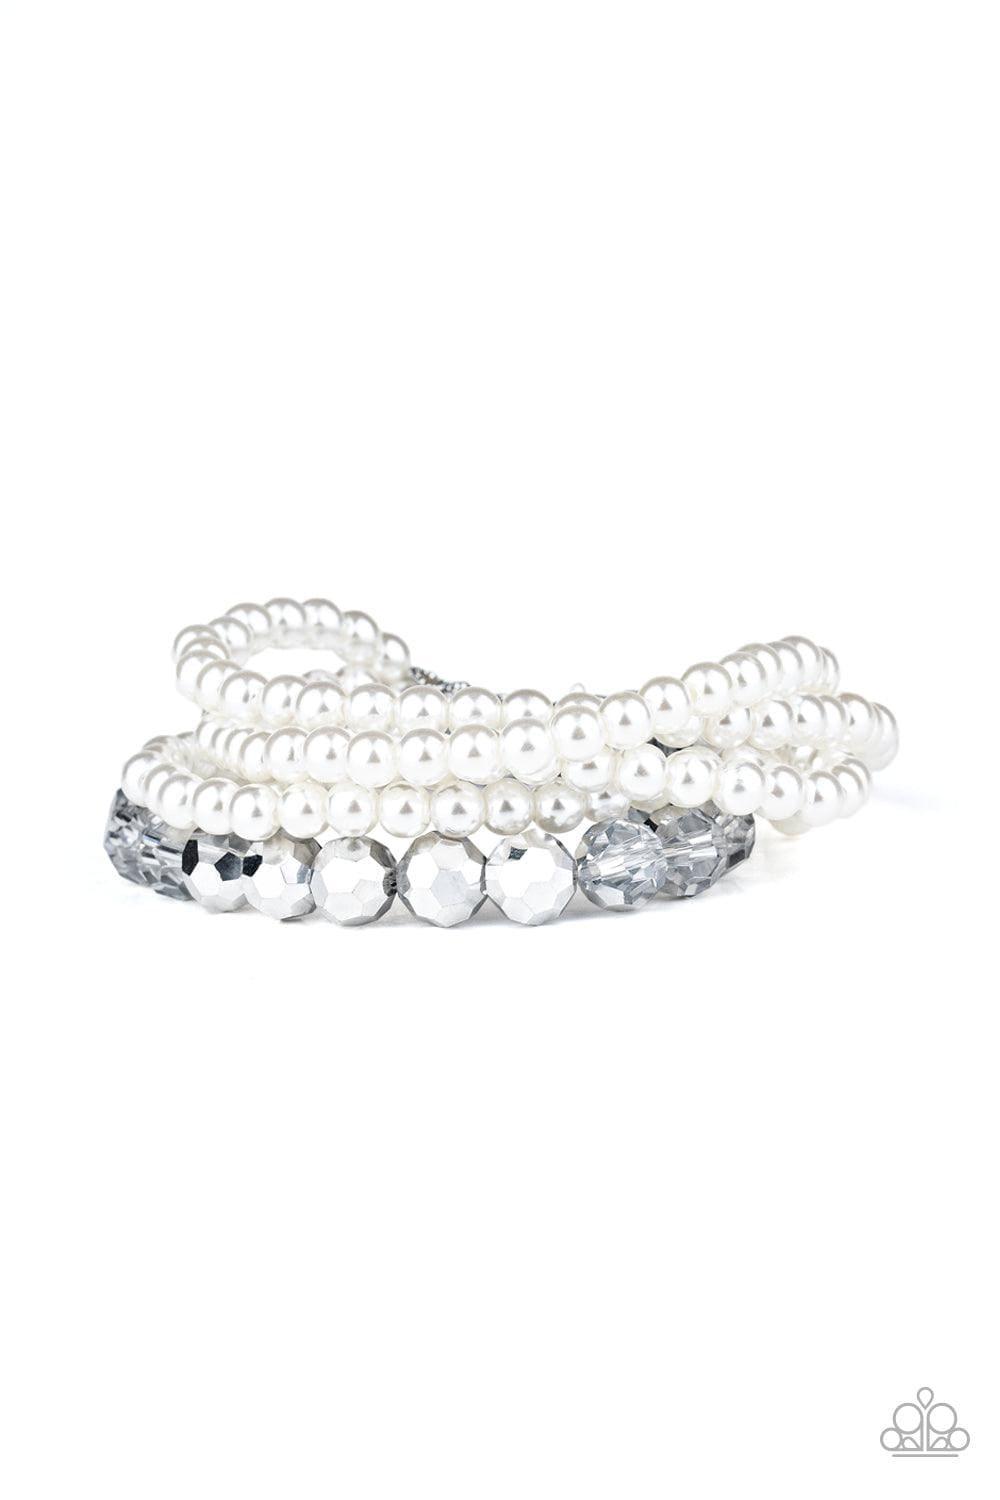 Paparazzi Accessories - Refined Renegade - White Pearl Bracelet - Bling by JessieK